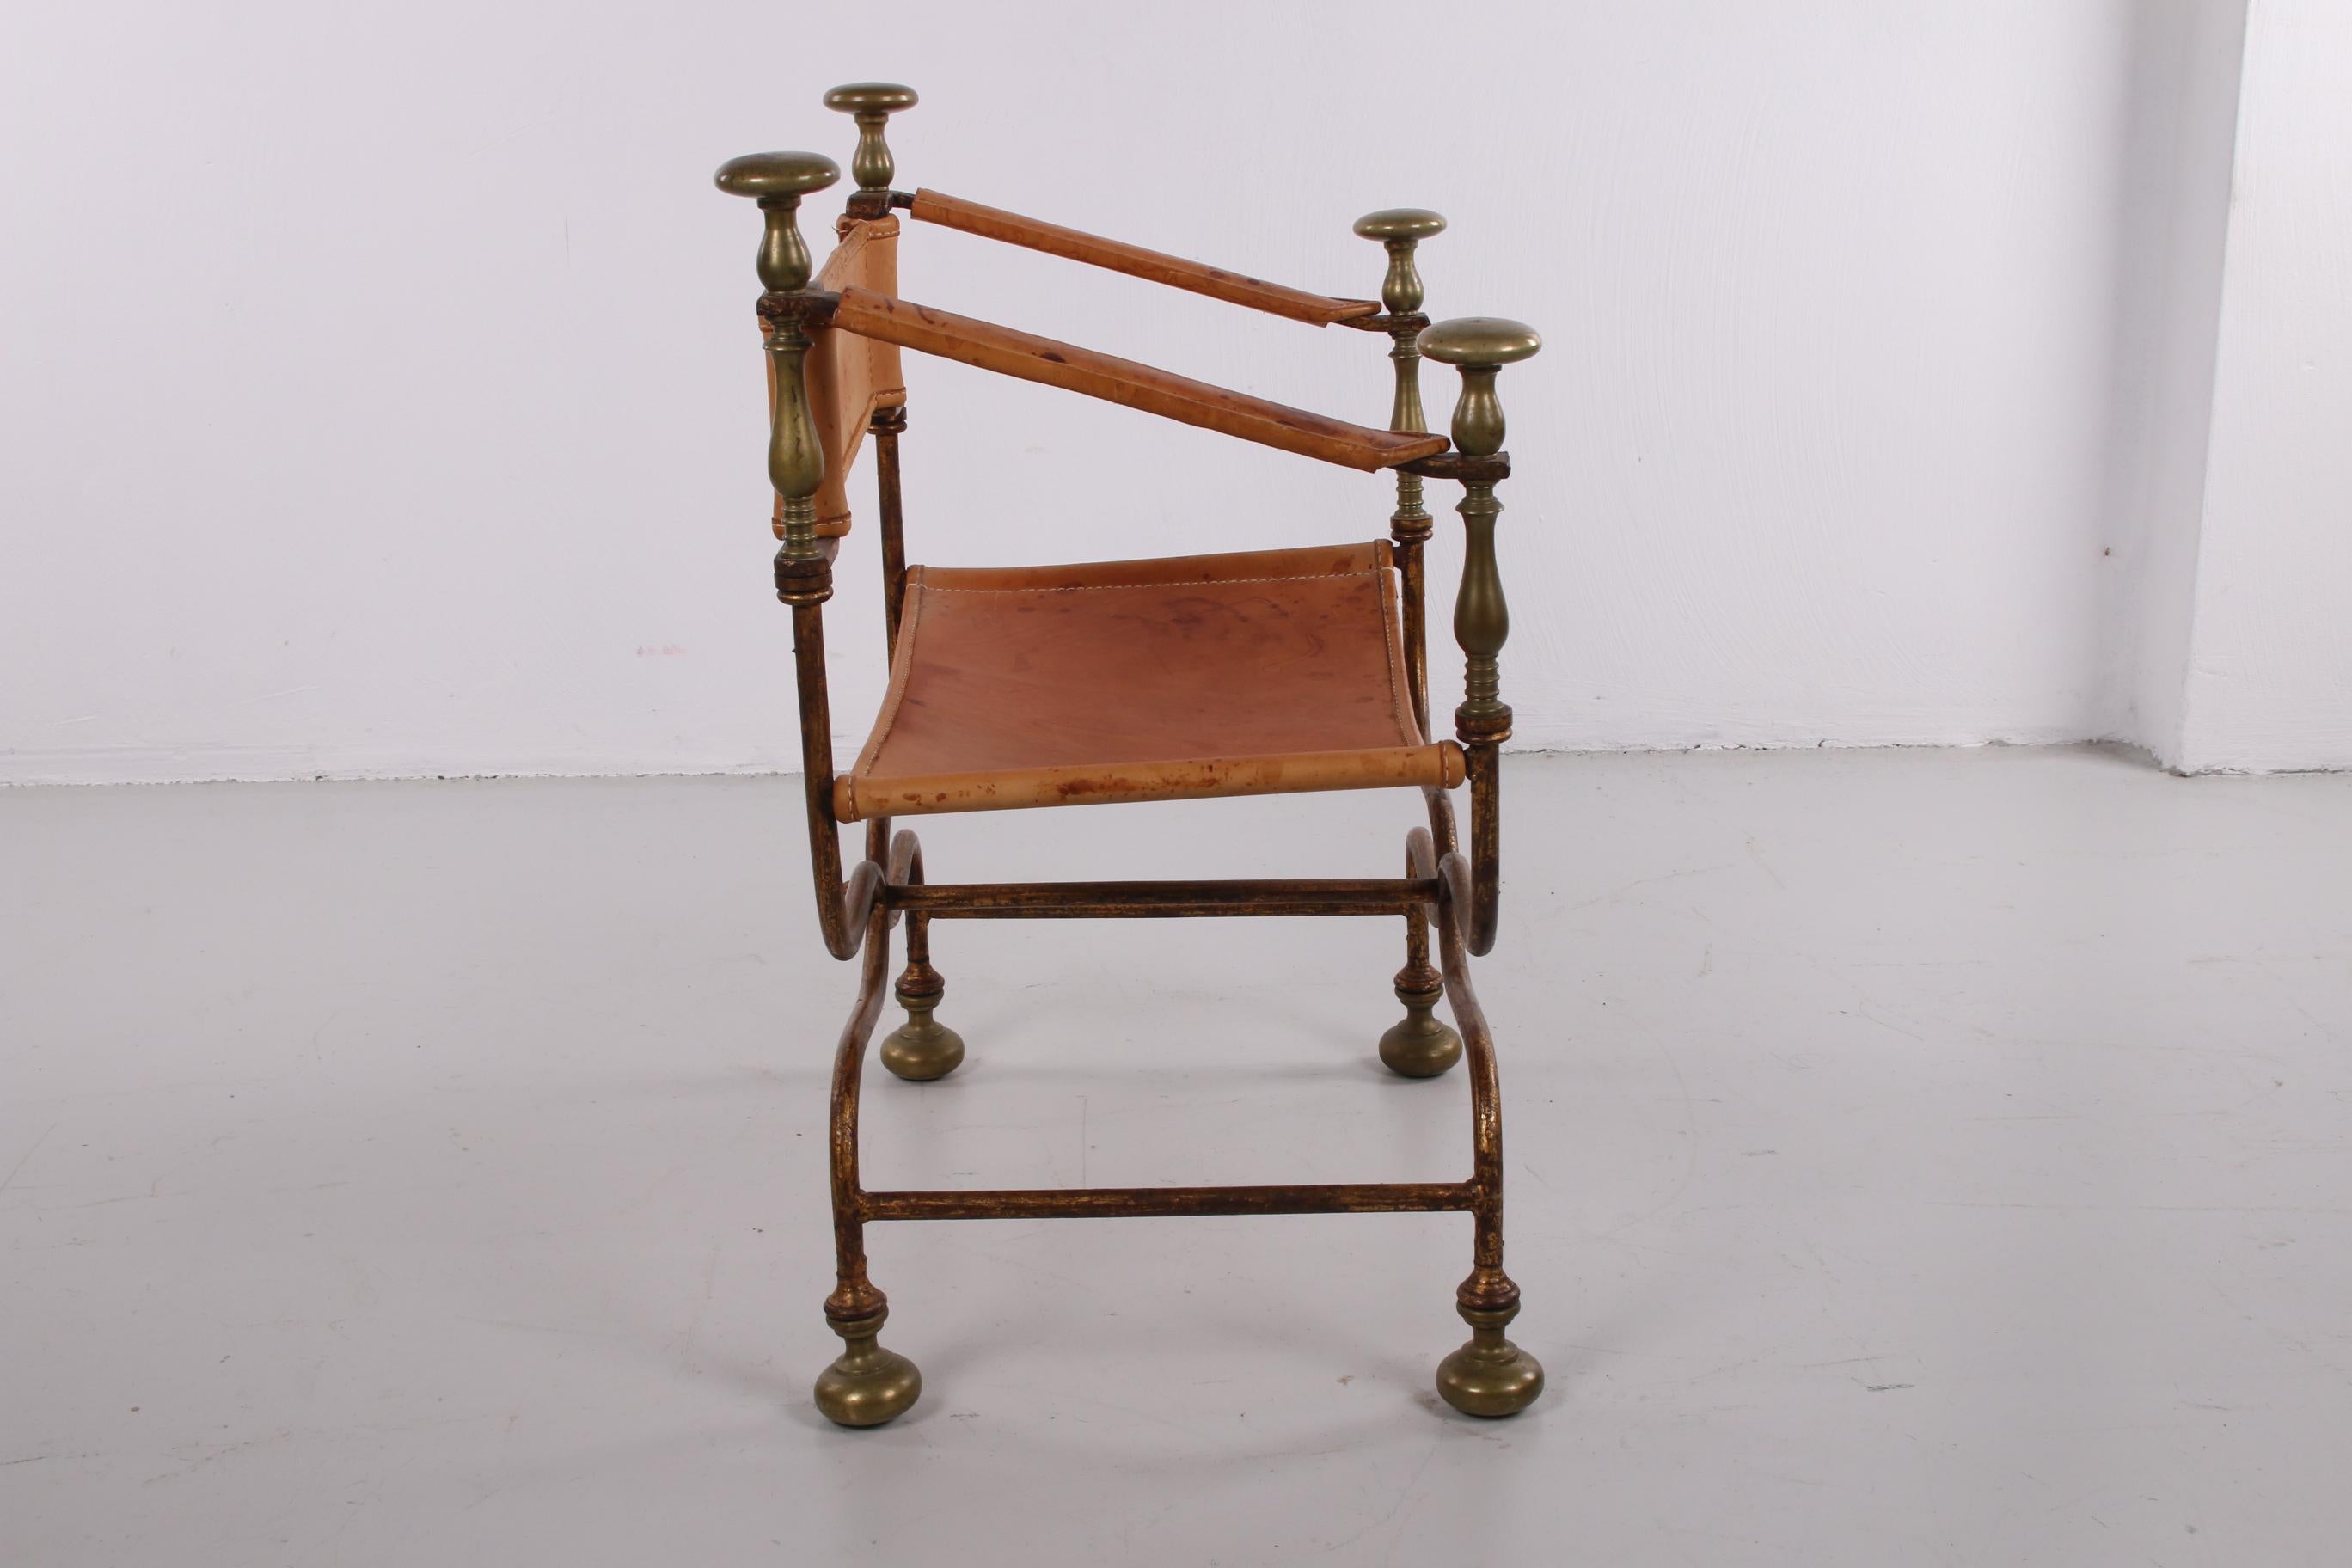 Barbizon School Italian Chair Made in 1940 by Iron Savonarola Dante